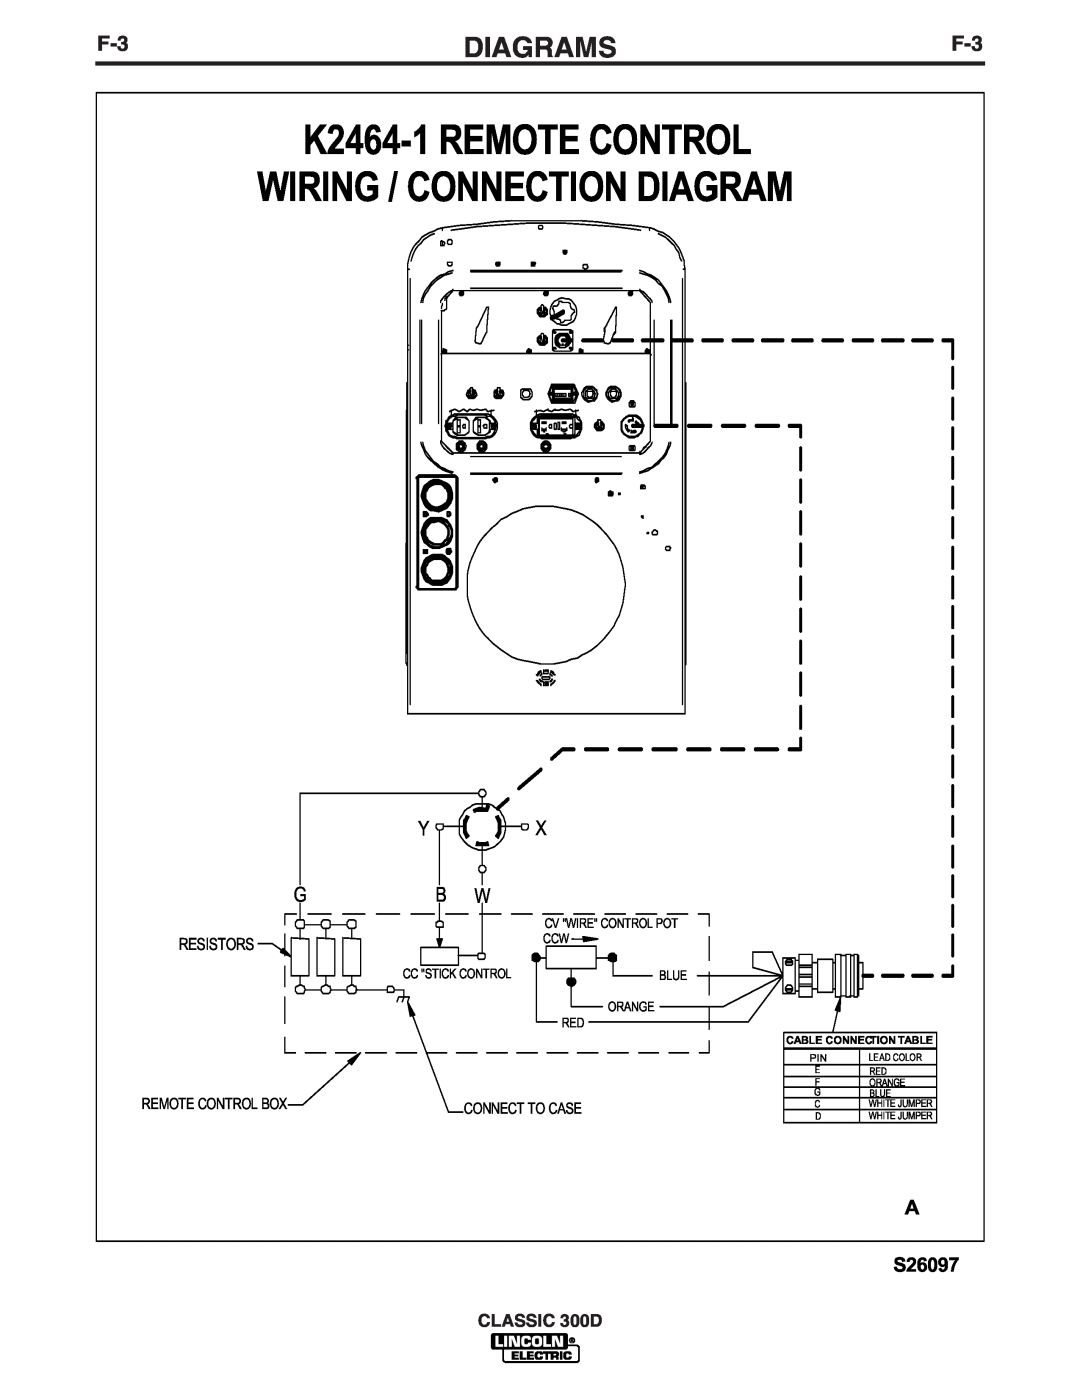 Lincoln Electric 300 D Y Gb W, K2464-1 REMOTE CONTROL WIRING / CONNECTION DIAGRAM, Diagrams, S26097, Cc Stick Control 